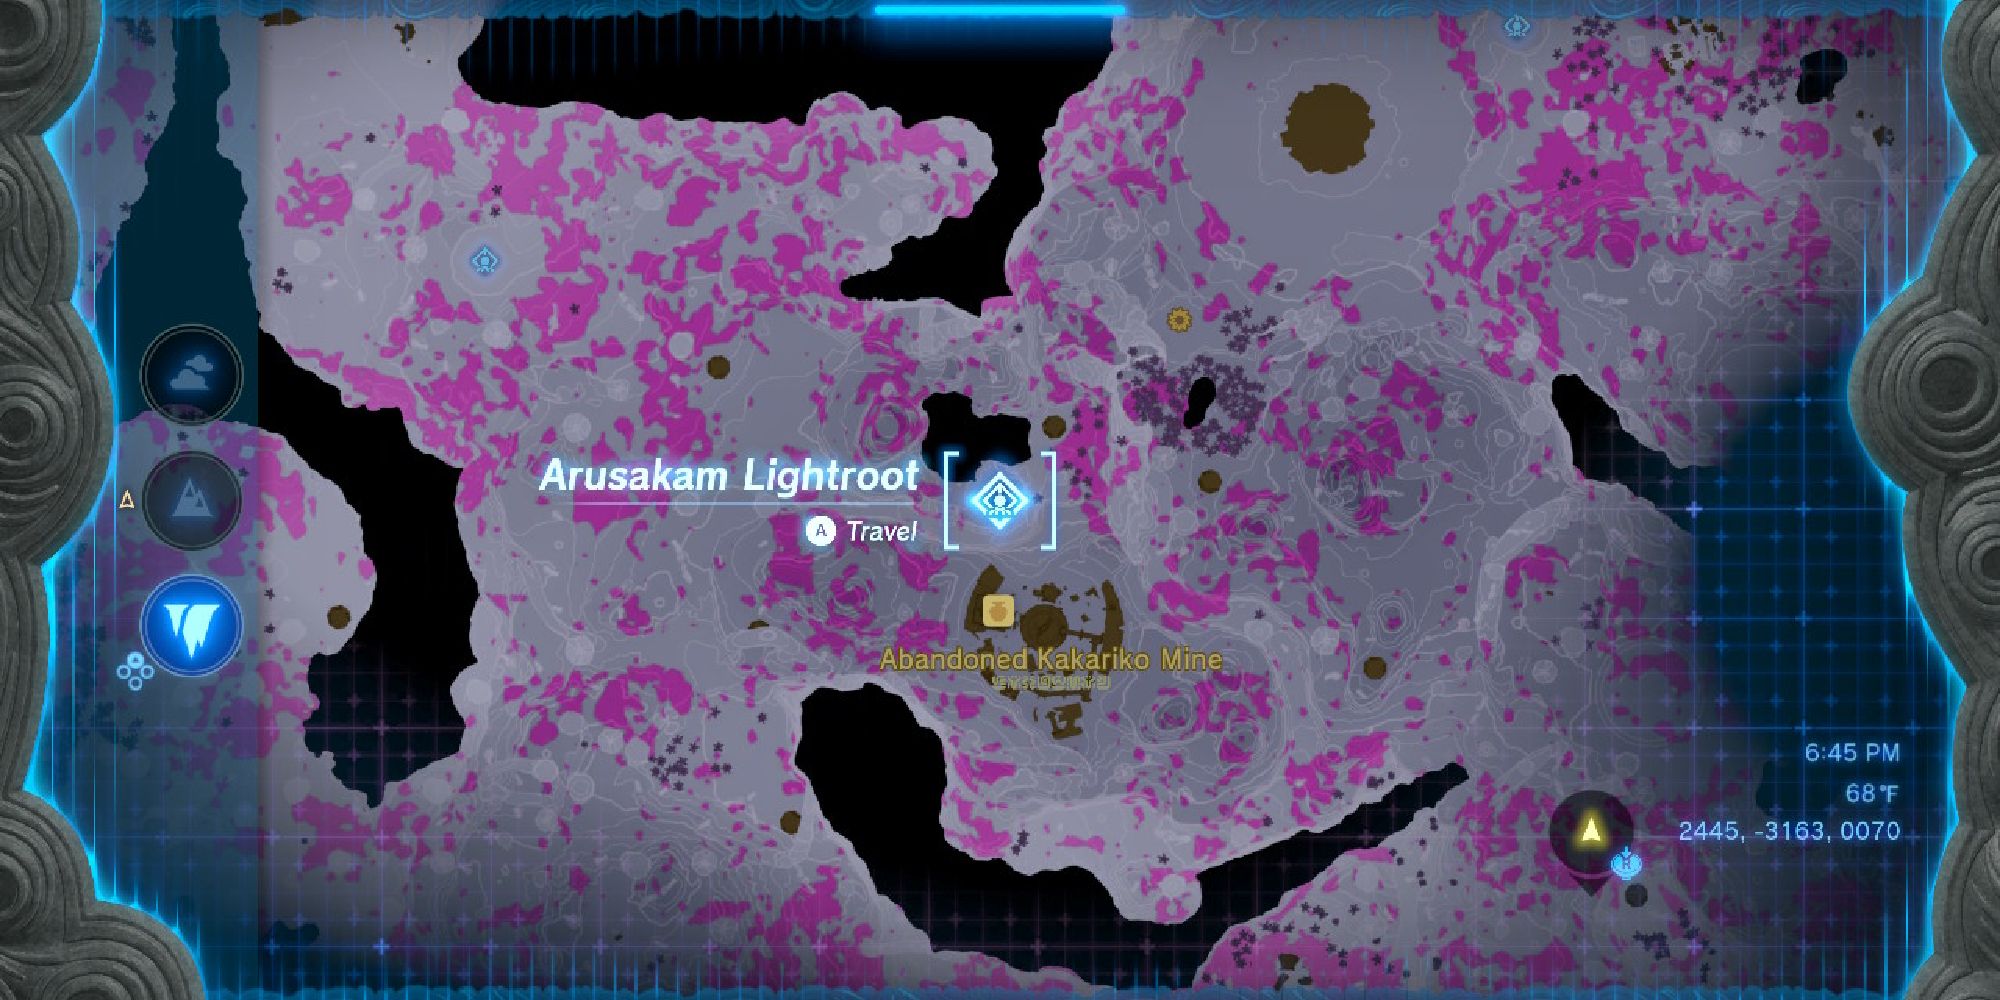 Abandoned Karkariko Mine on map with arusakam lightroot highlighted